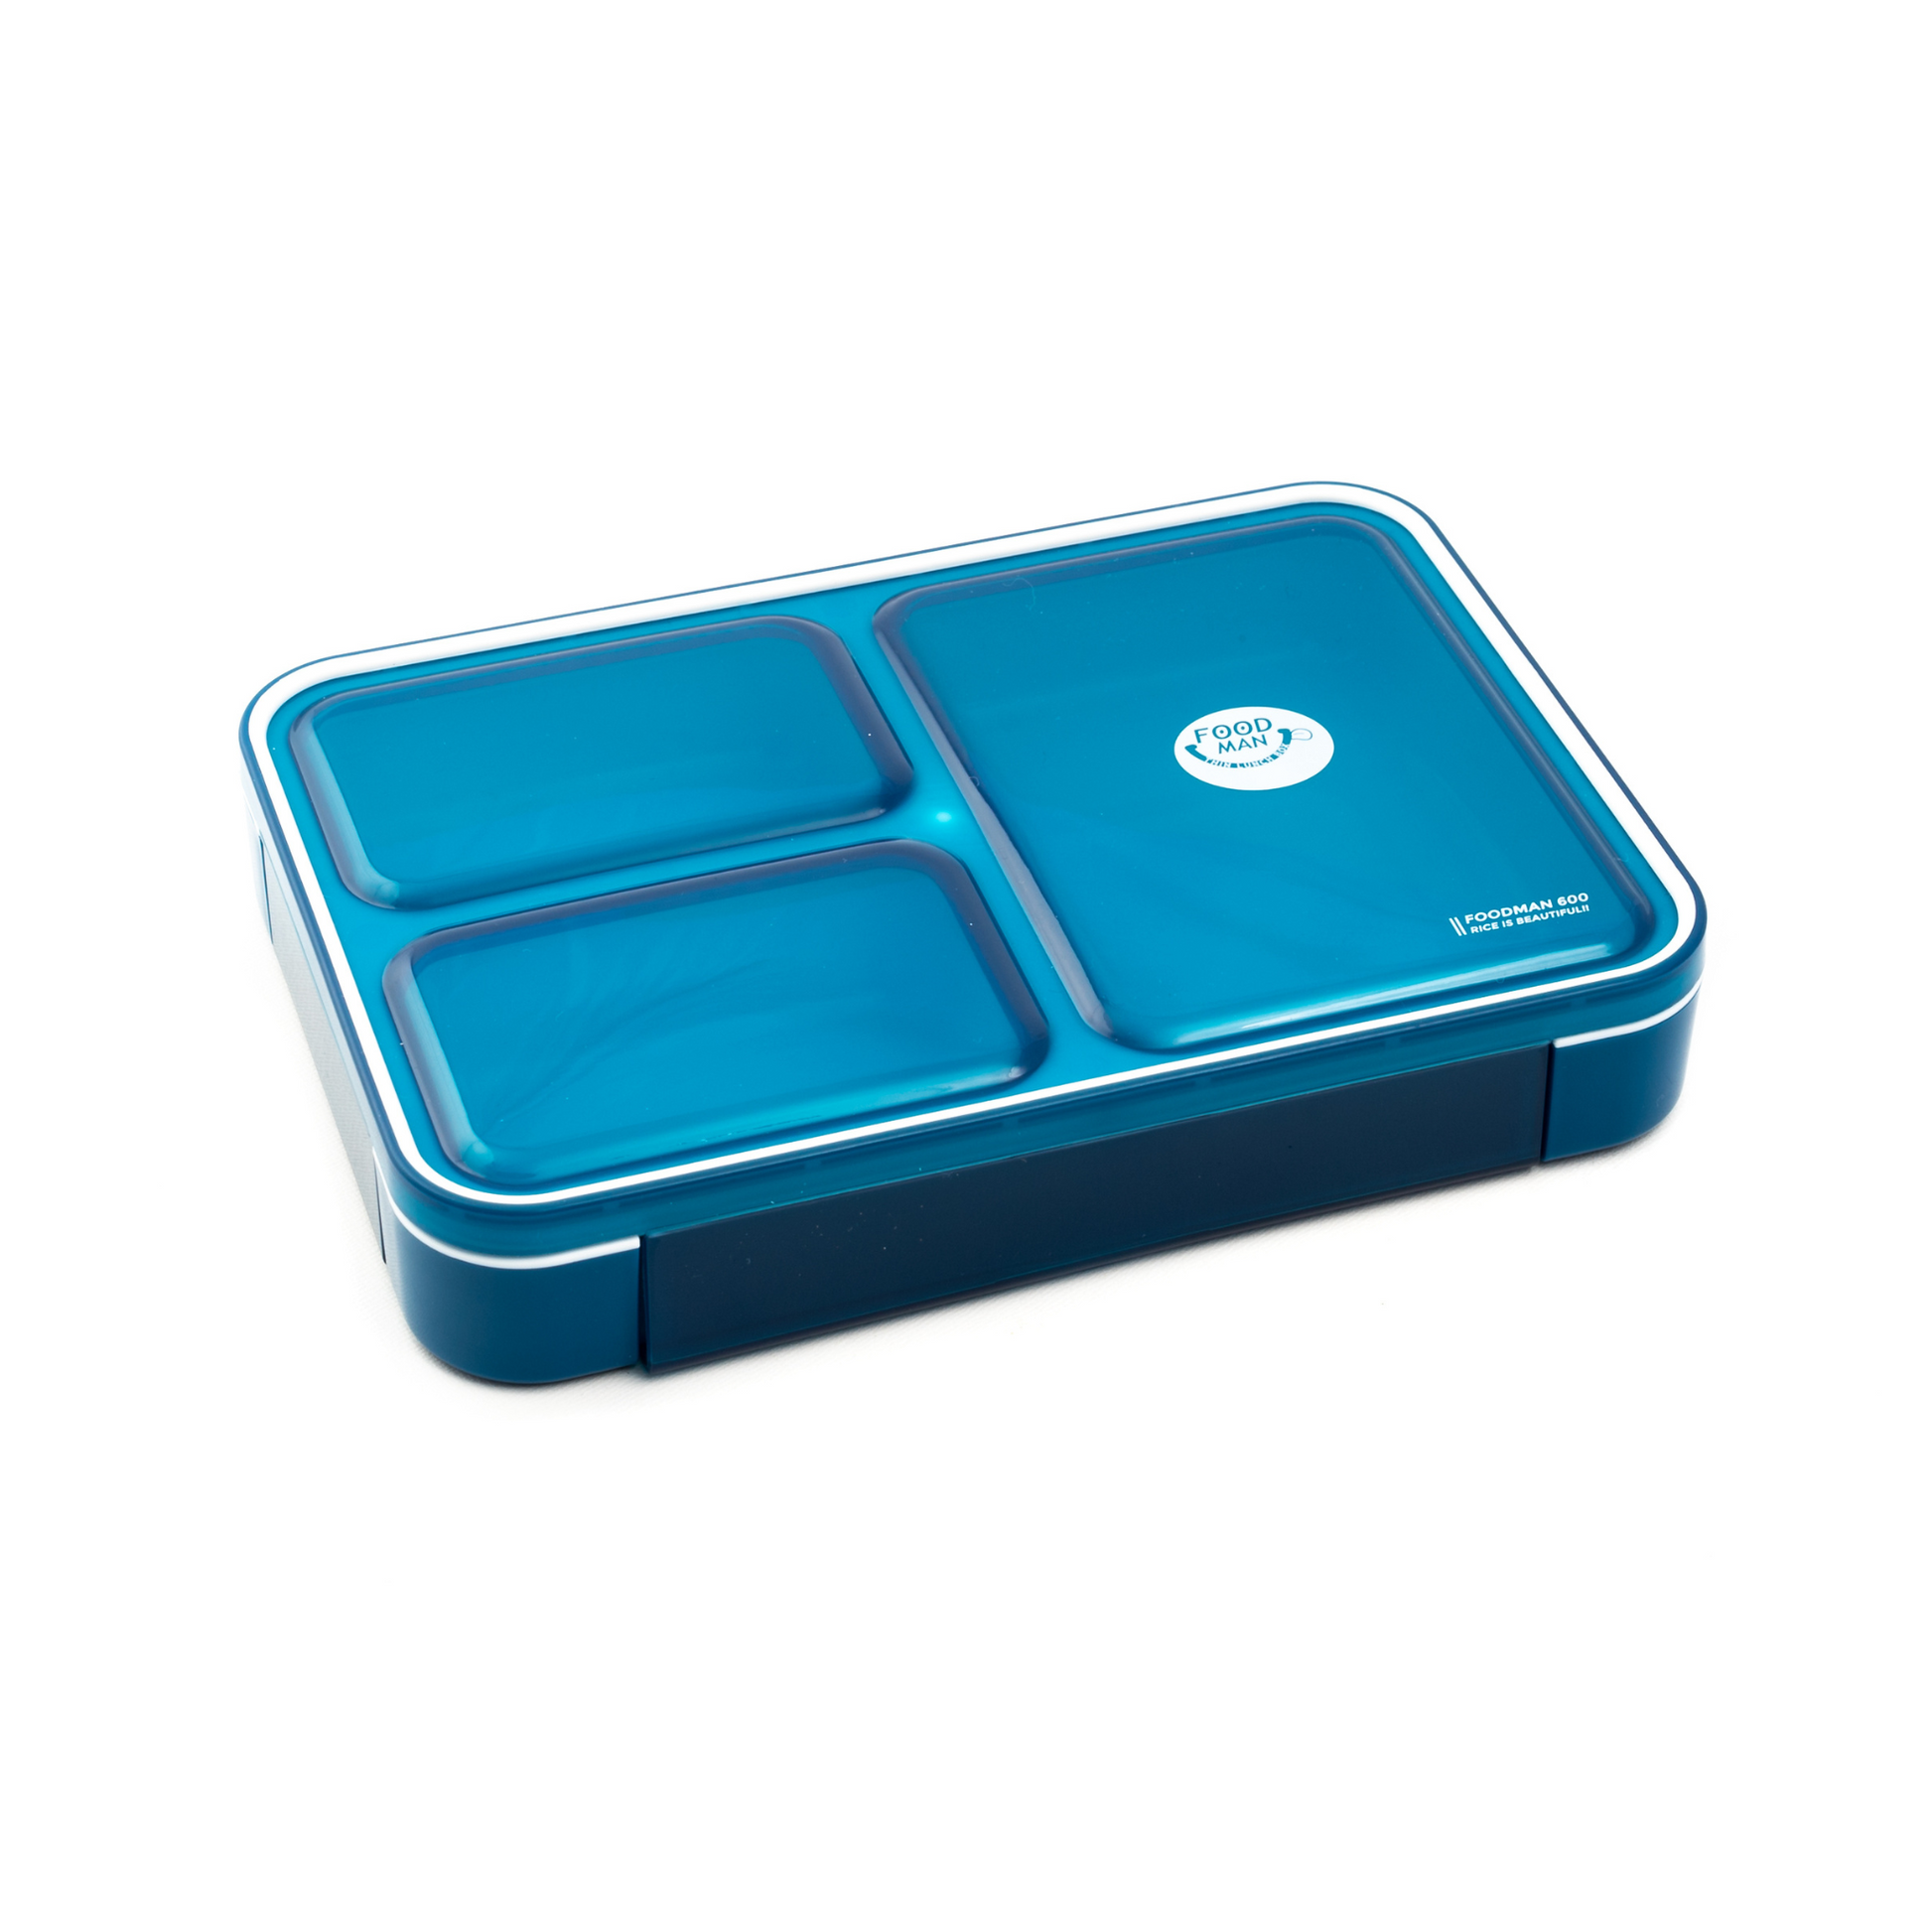 Plastic Tupperware Microwave Safe Container, Capacity: 600ml